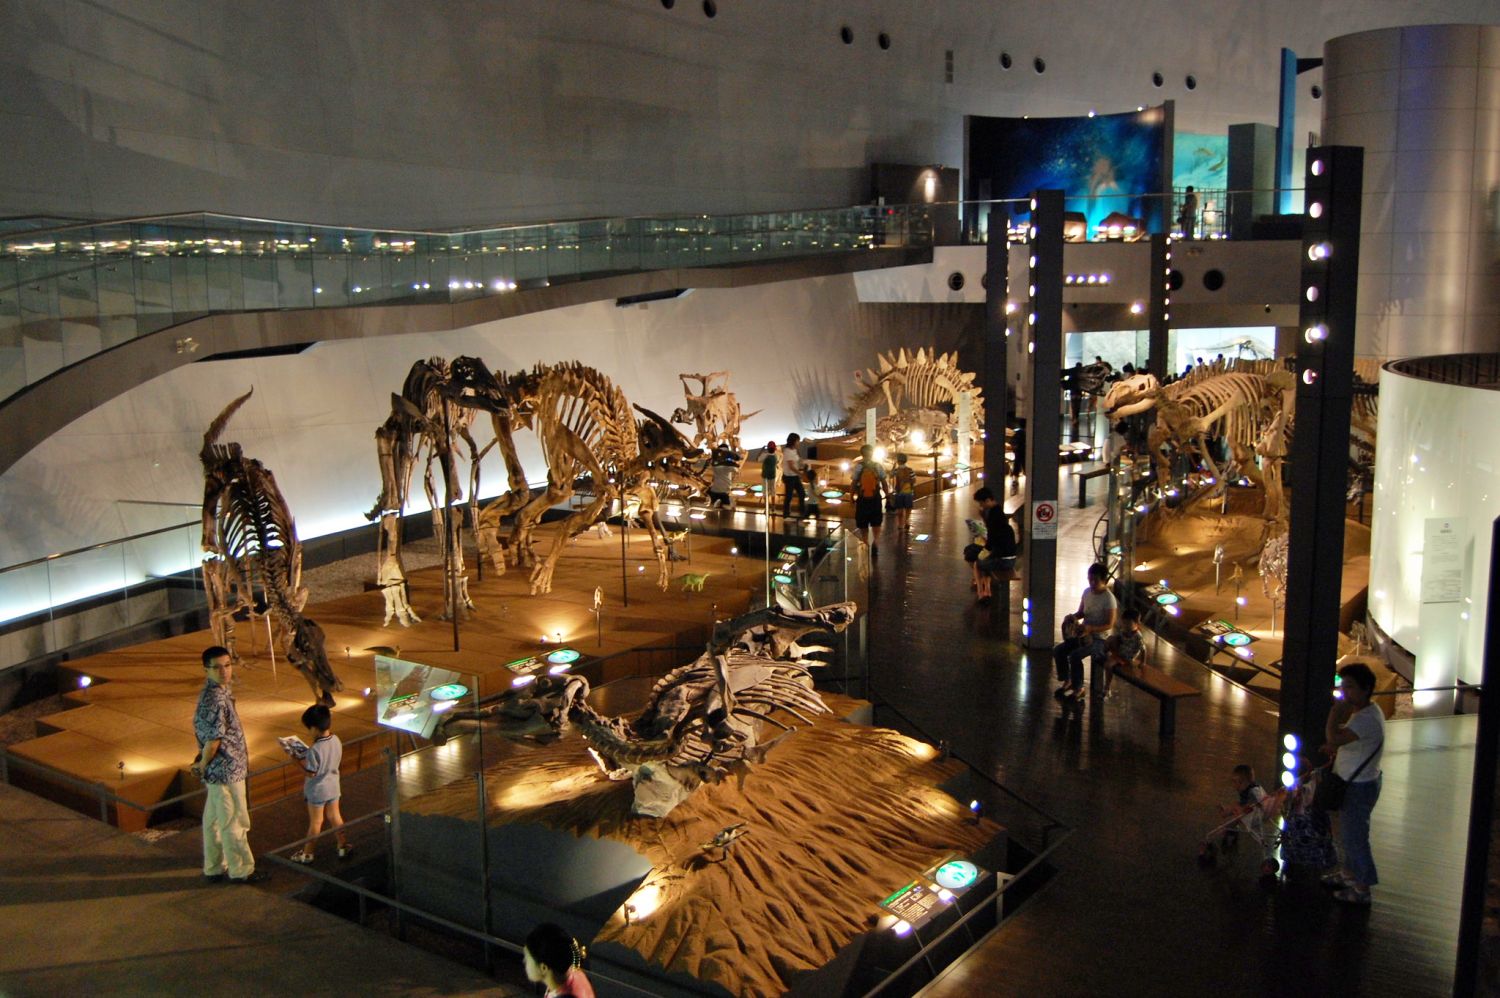 Fukui Prefectural Dinosaur Museum, Katsuyama